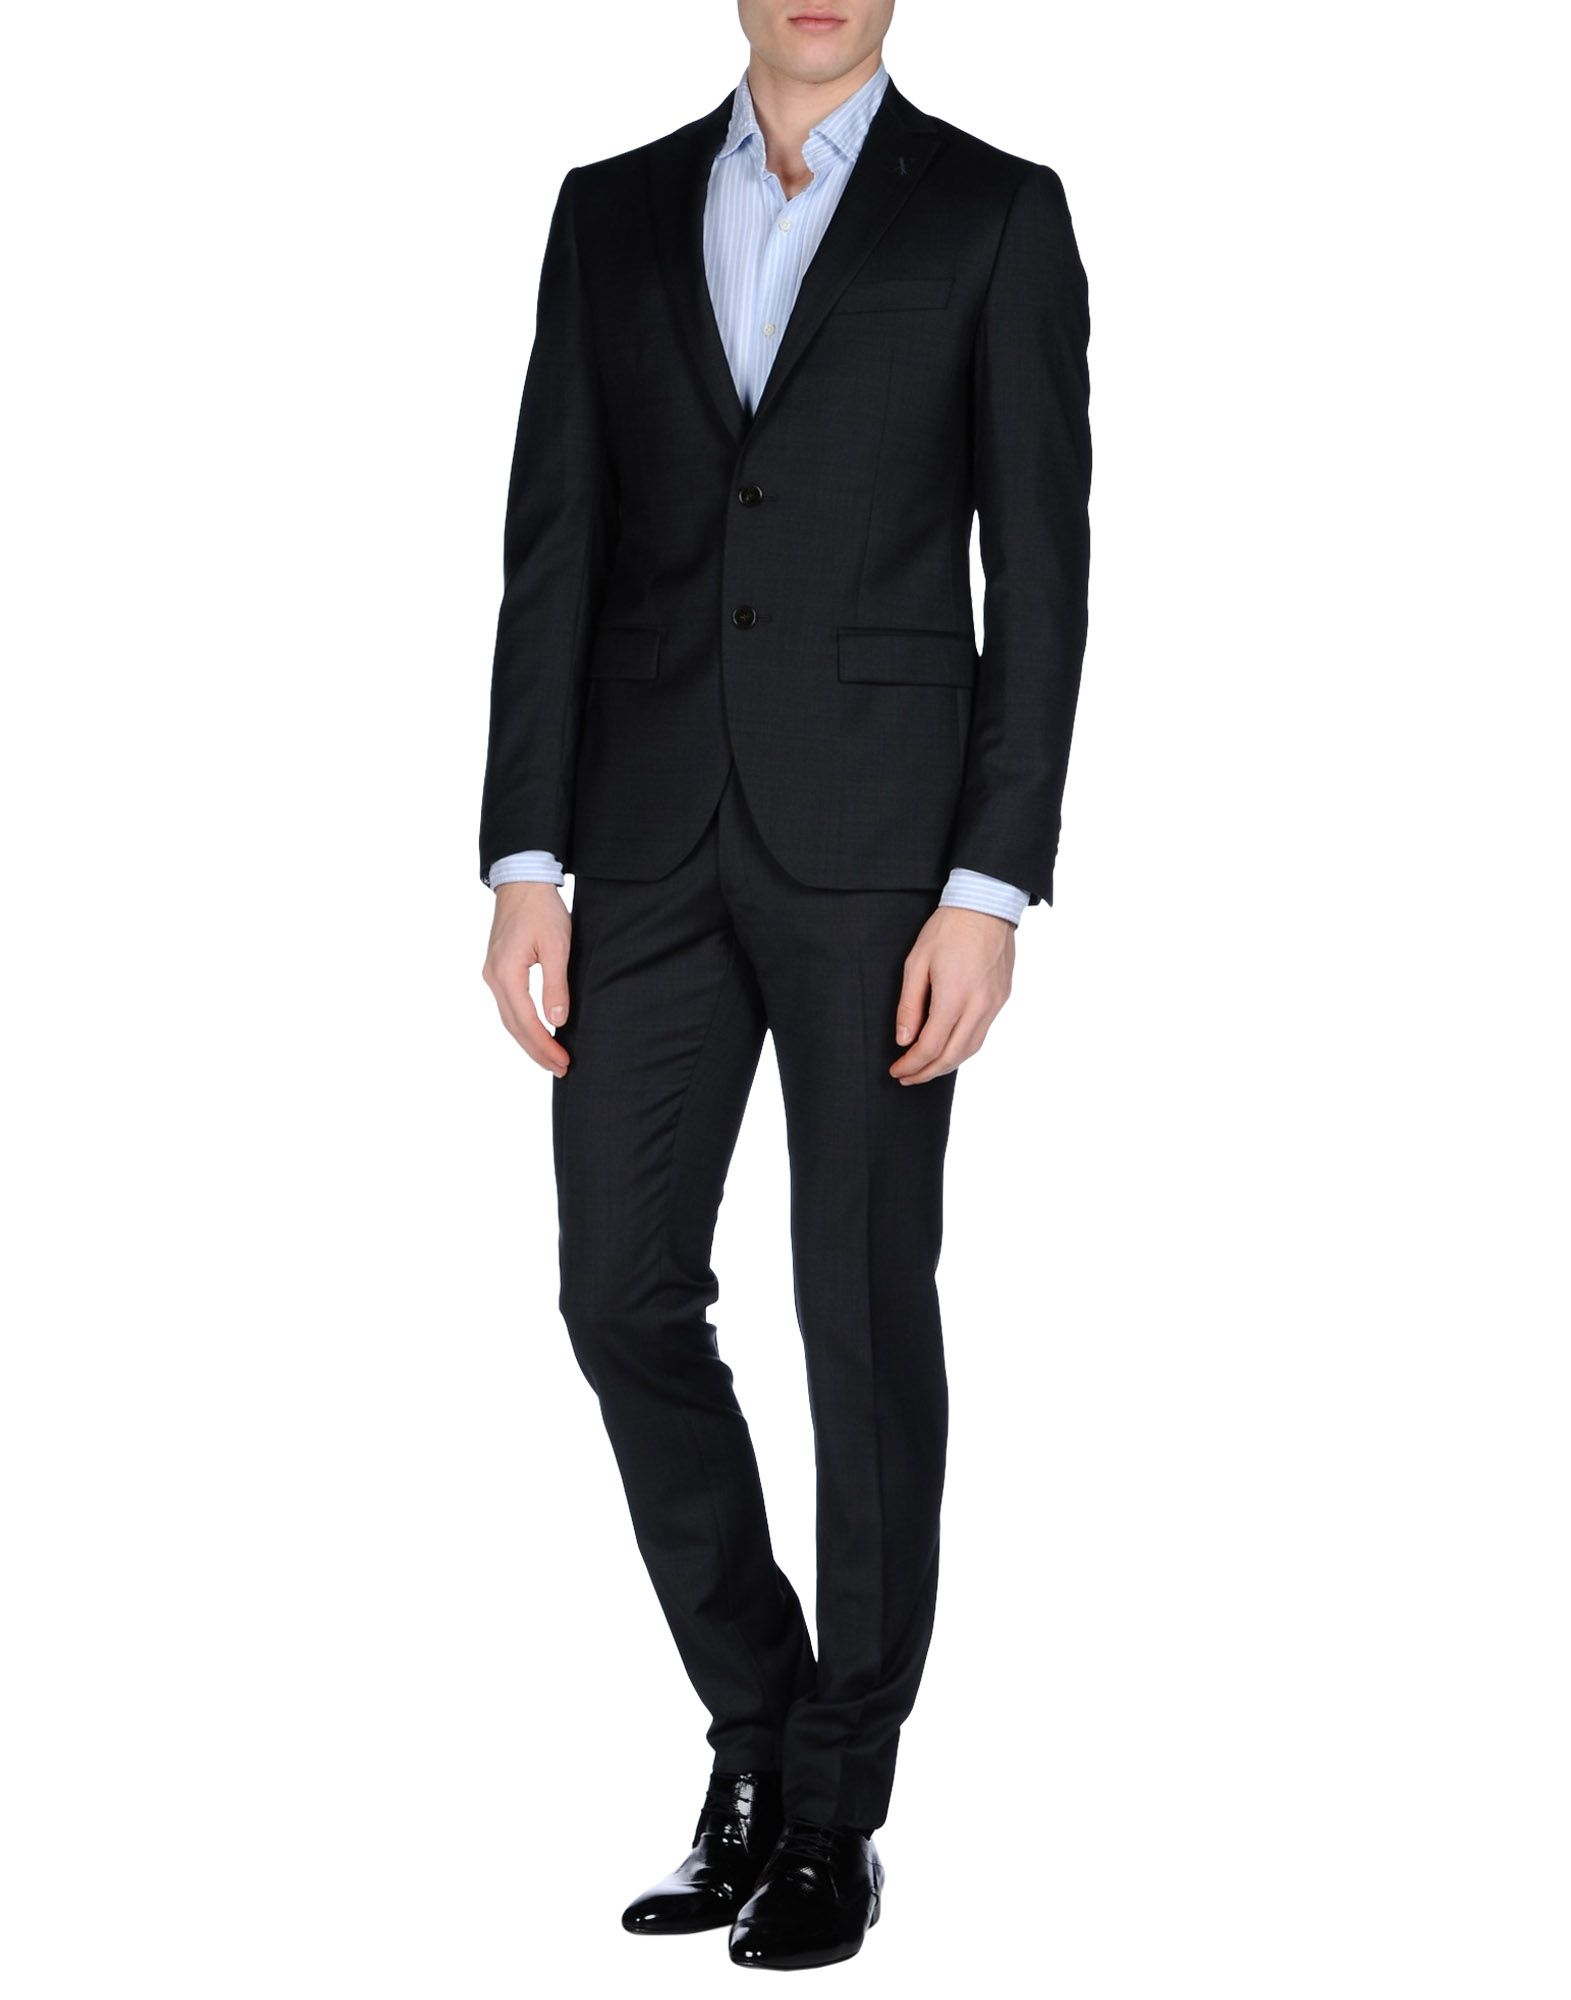 Lyst - Christian Lacroix Suit in Gray for Men